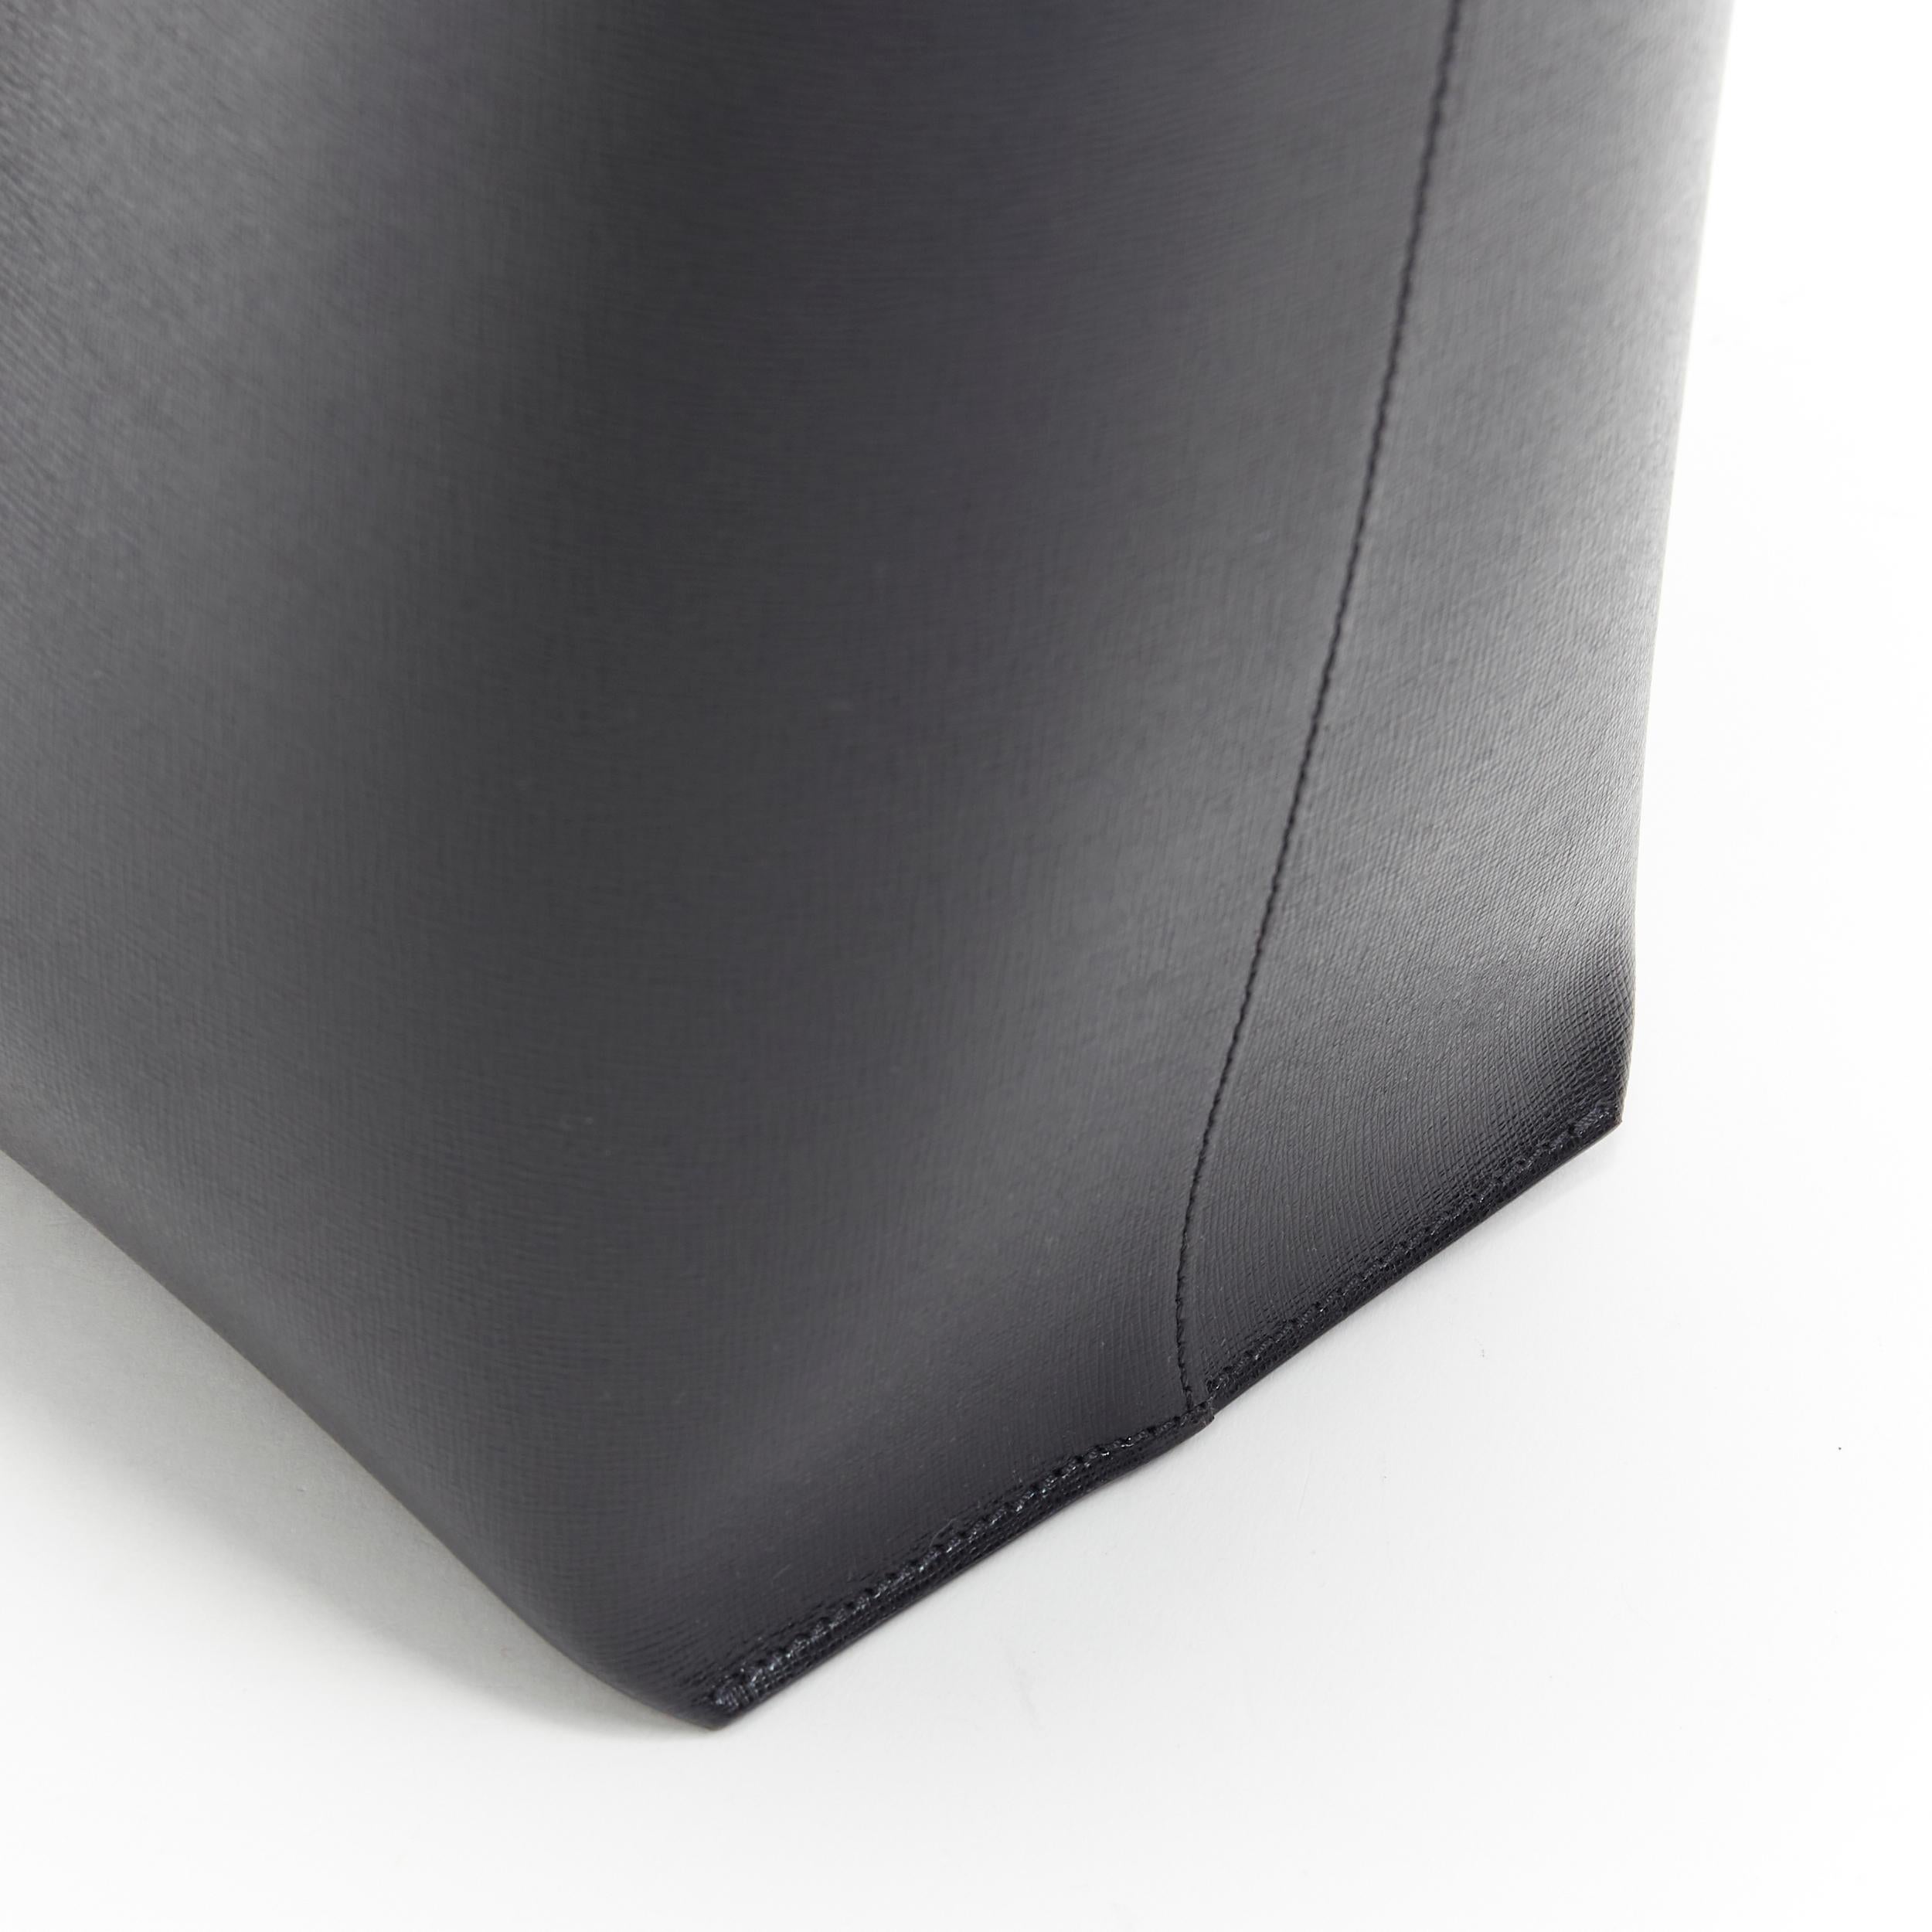 new VERSACE Palazzo Medusa black calf saffiano leather large neverfull tote bag 1